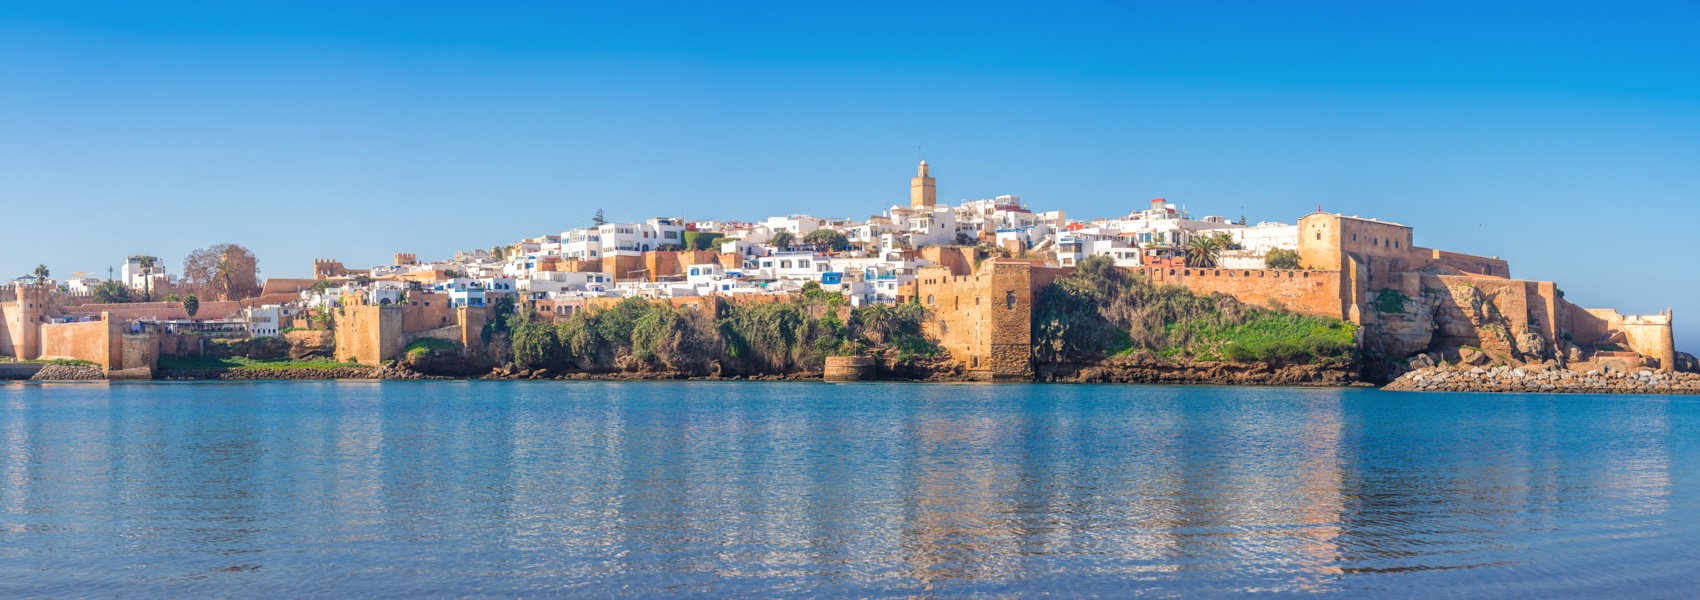 Panorama de Rabat